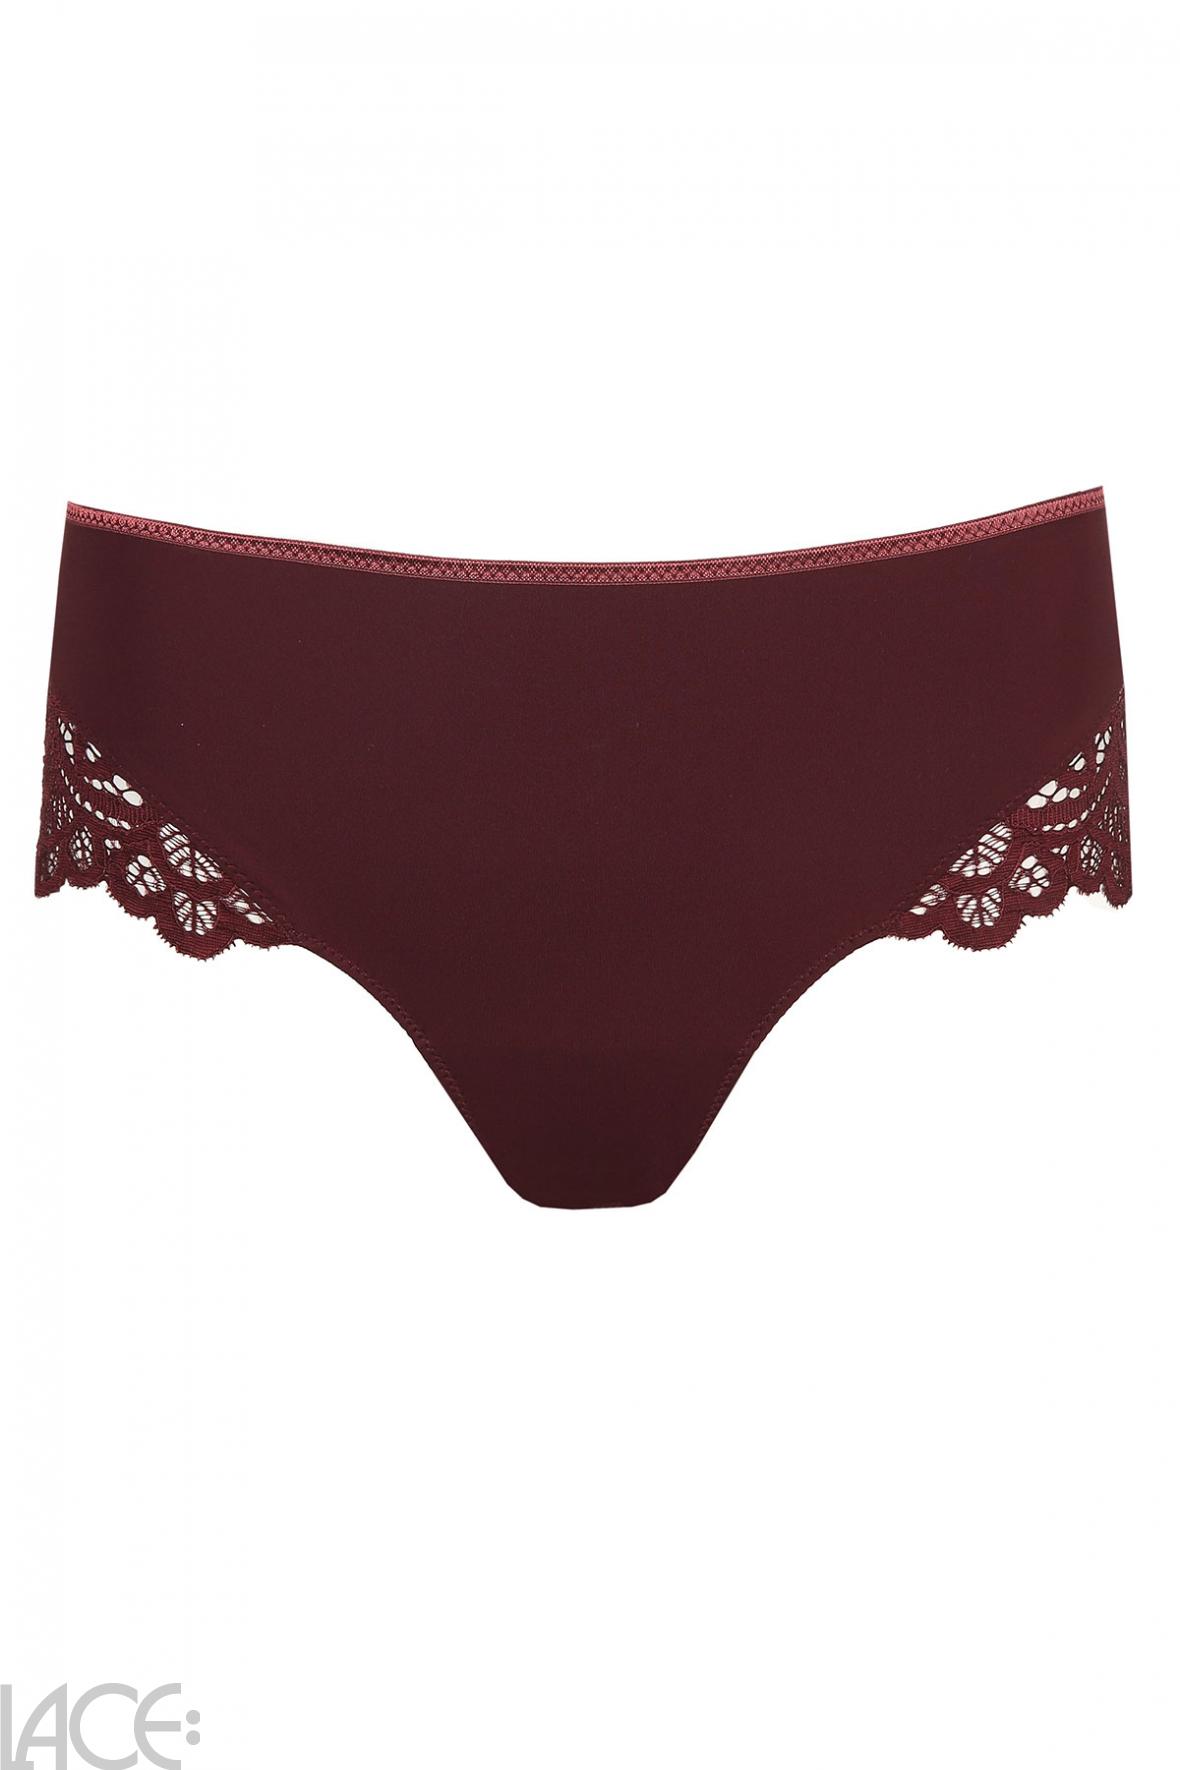 PrimaDonna Twist First Night Hot pants – Lace-Lingerie.com